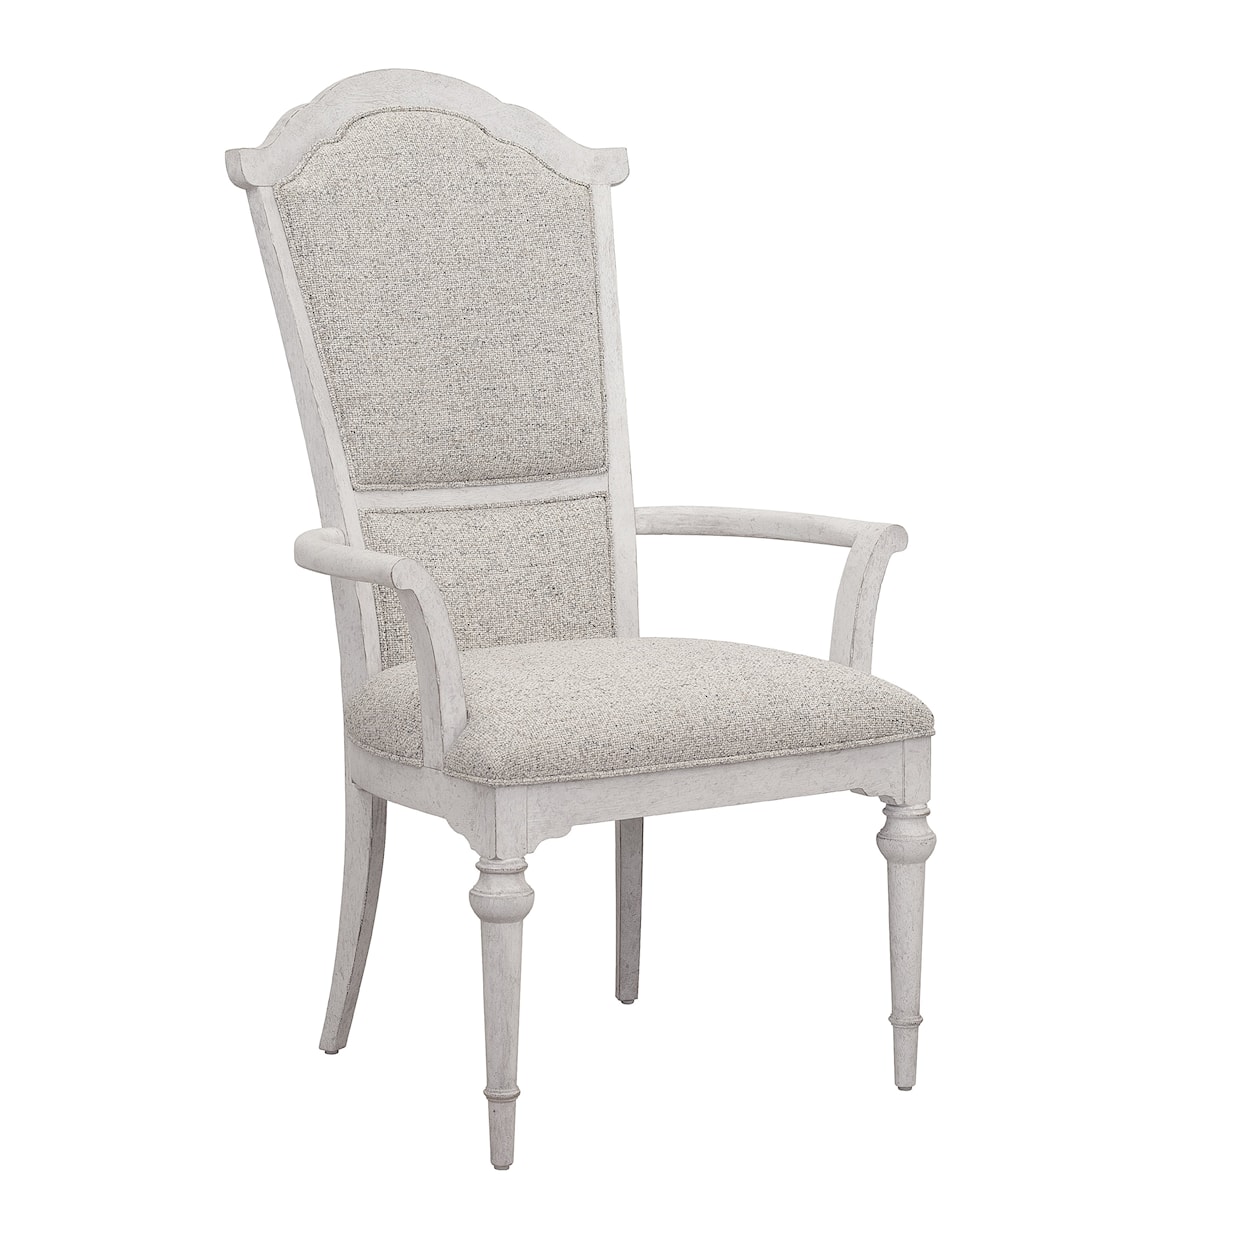 Pulaski Furniture Higgins Street Upholstered Dining Arm Chair